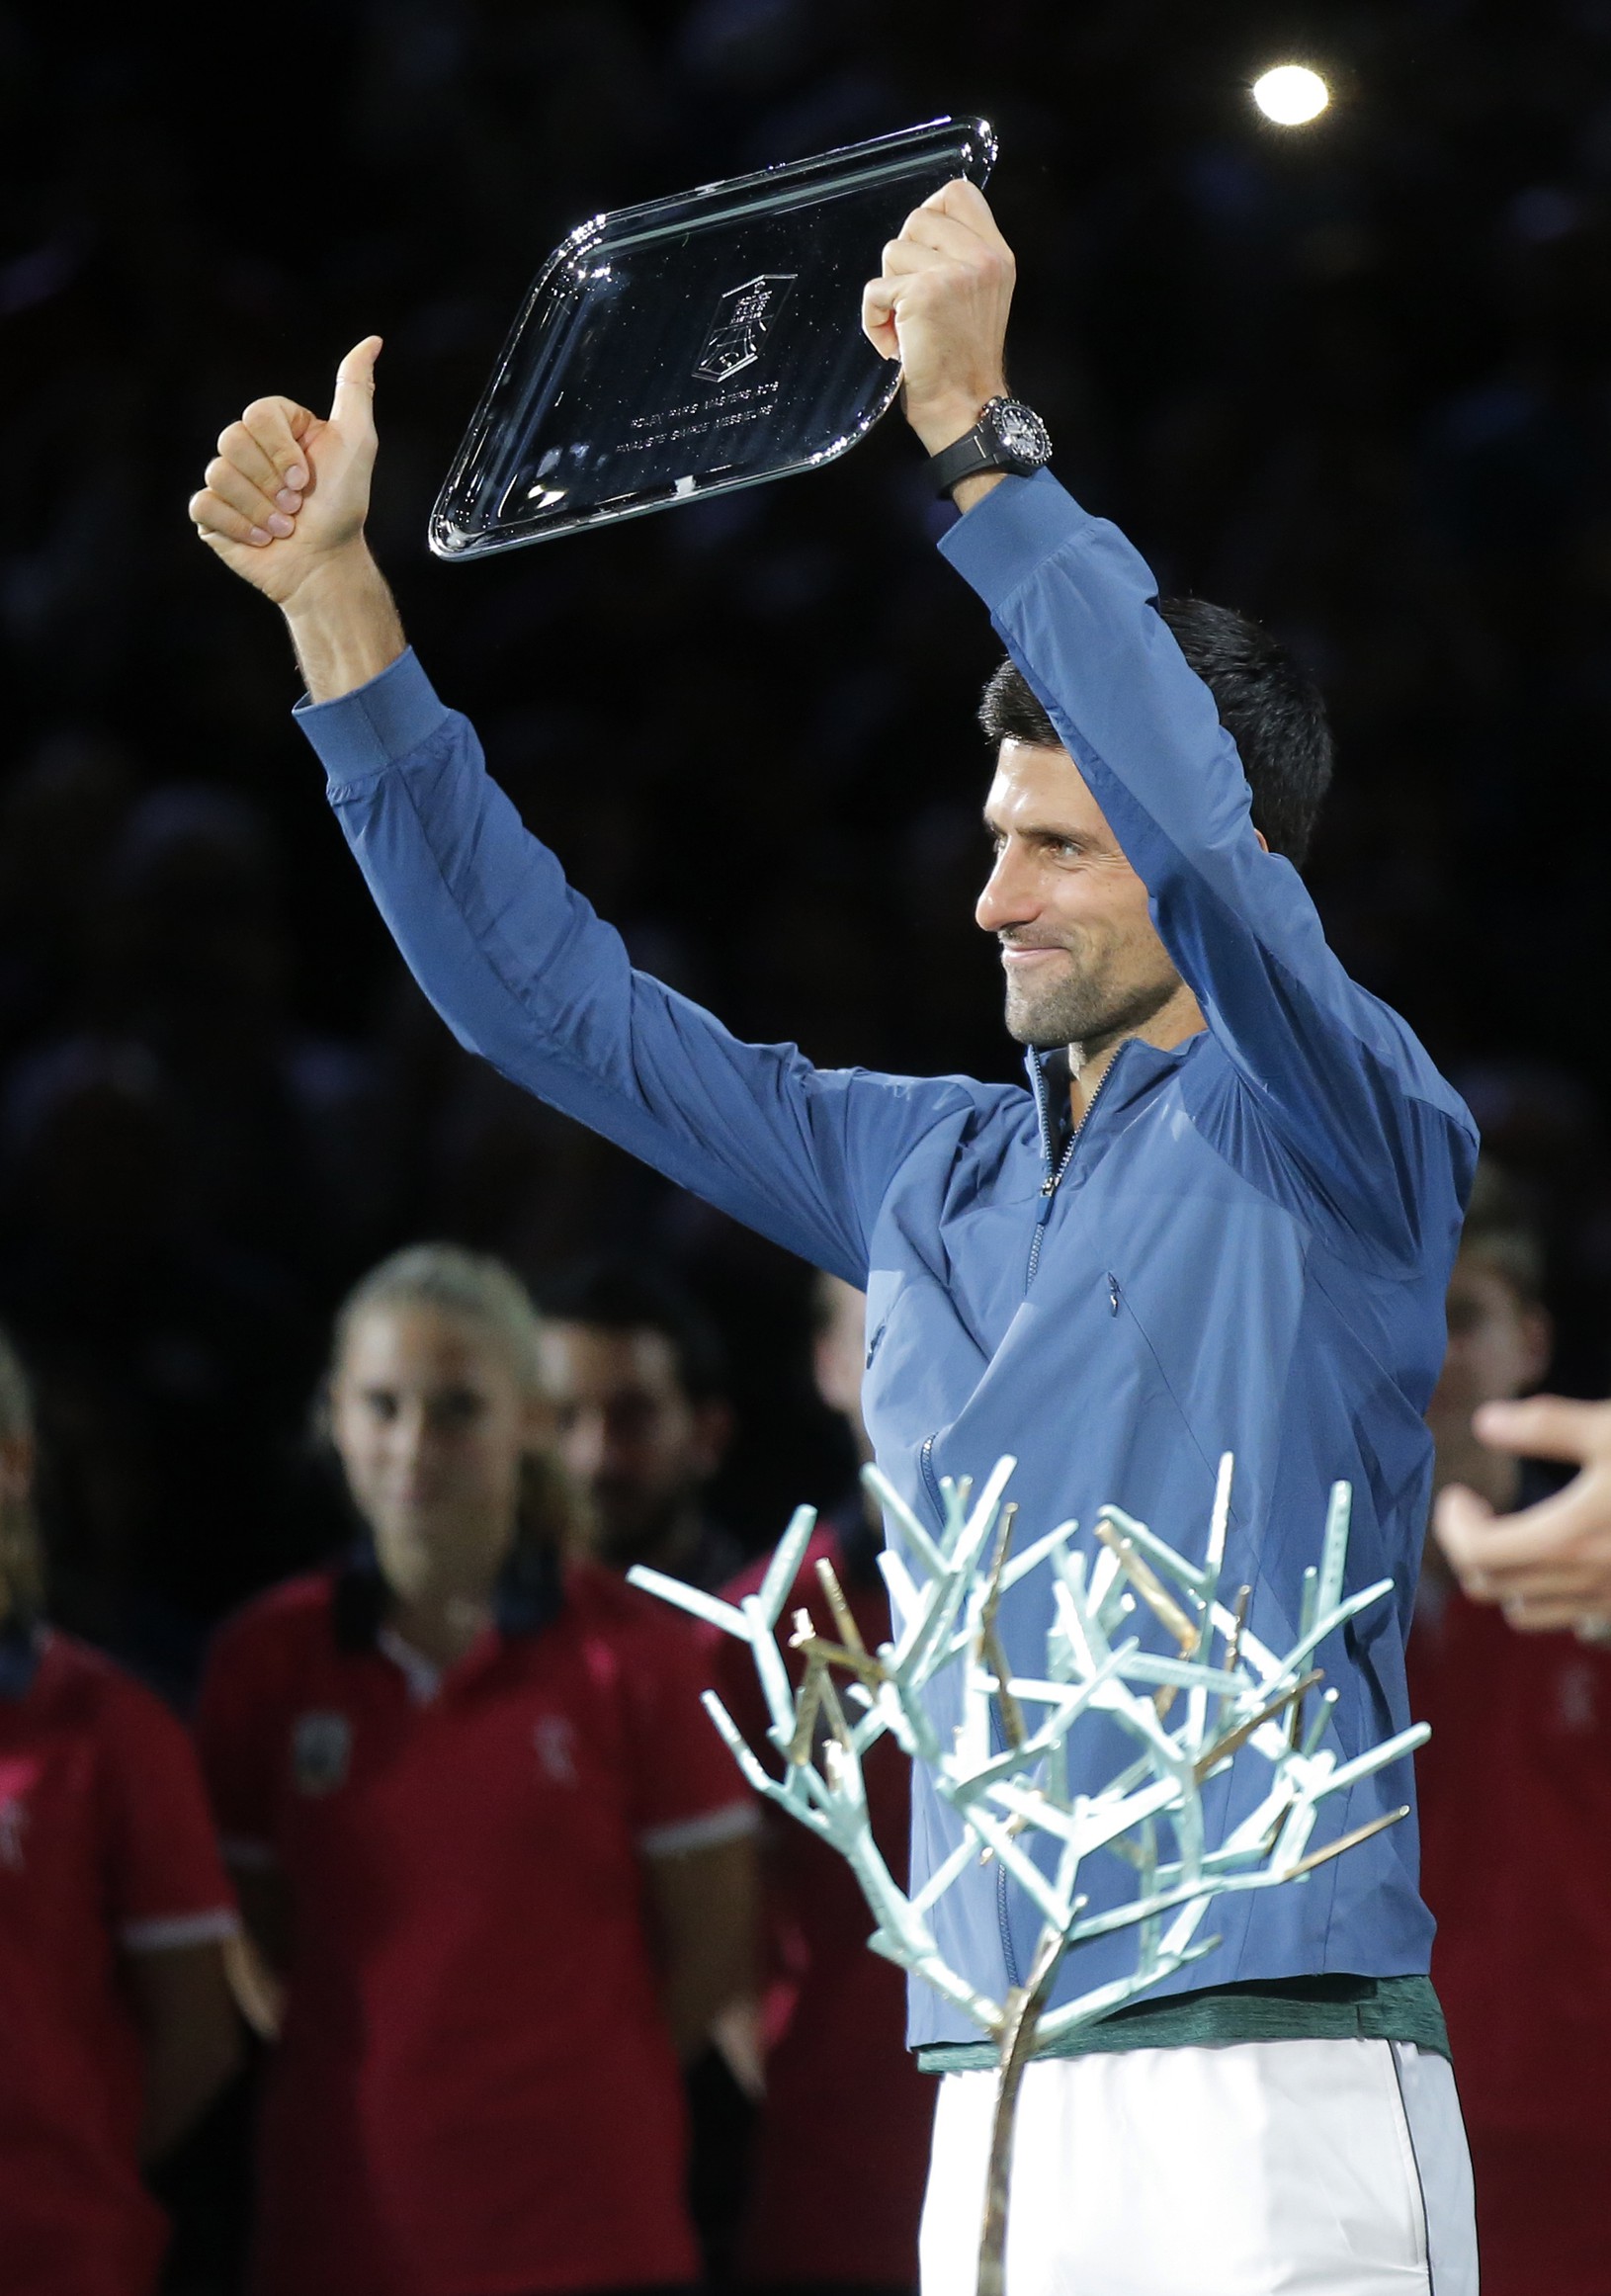 Novak Djokovič s trofejou